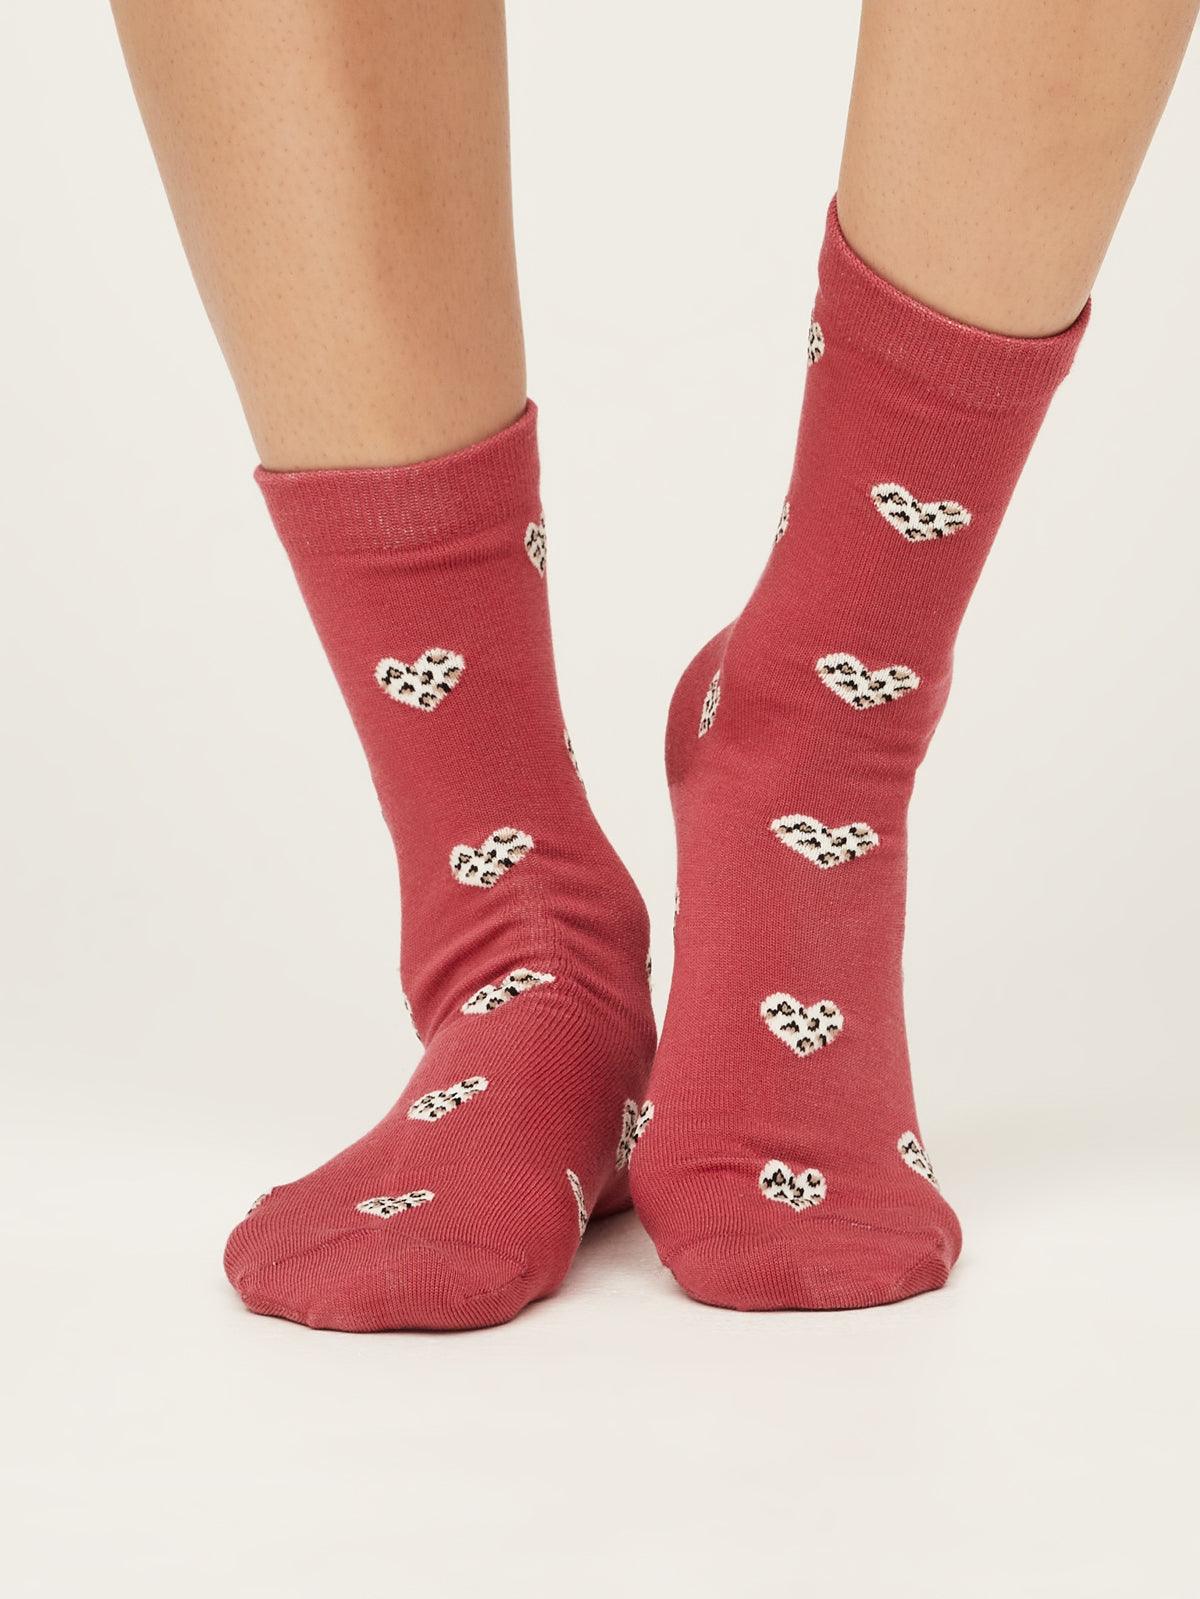 Leopard Heart Socks - Blush Pink - Thought Clothing UK